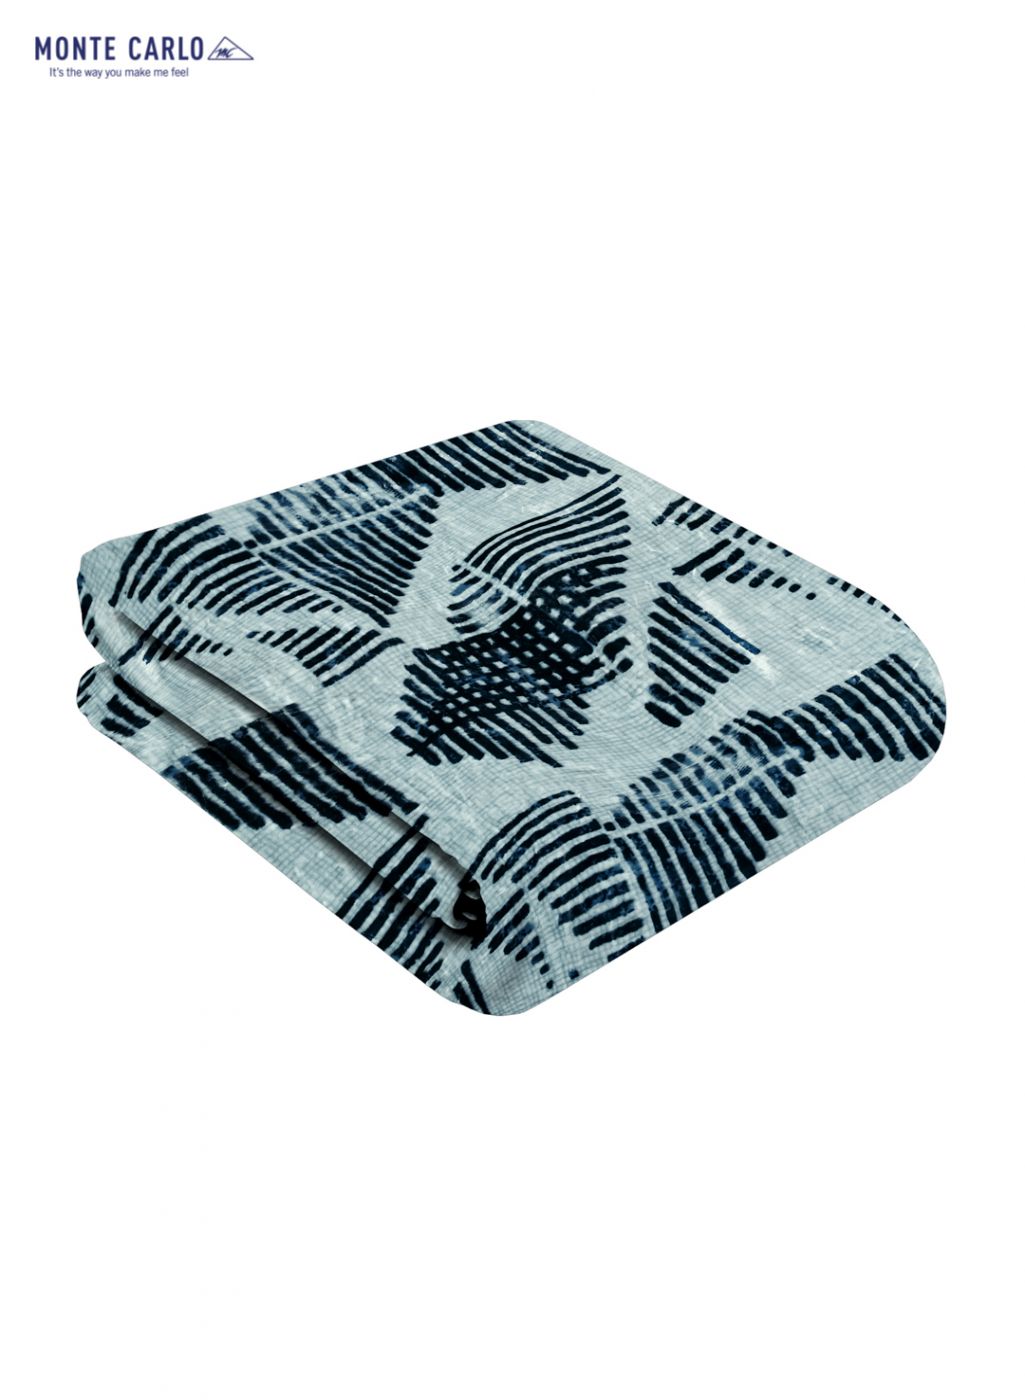 Printed Mink Single Blanket for Mild Winter - 2 Ply